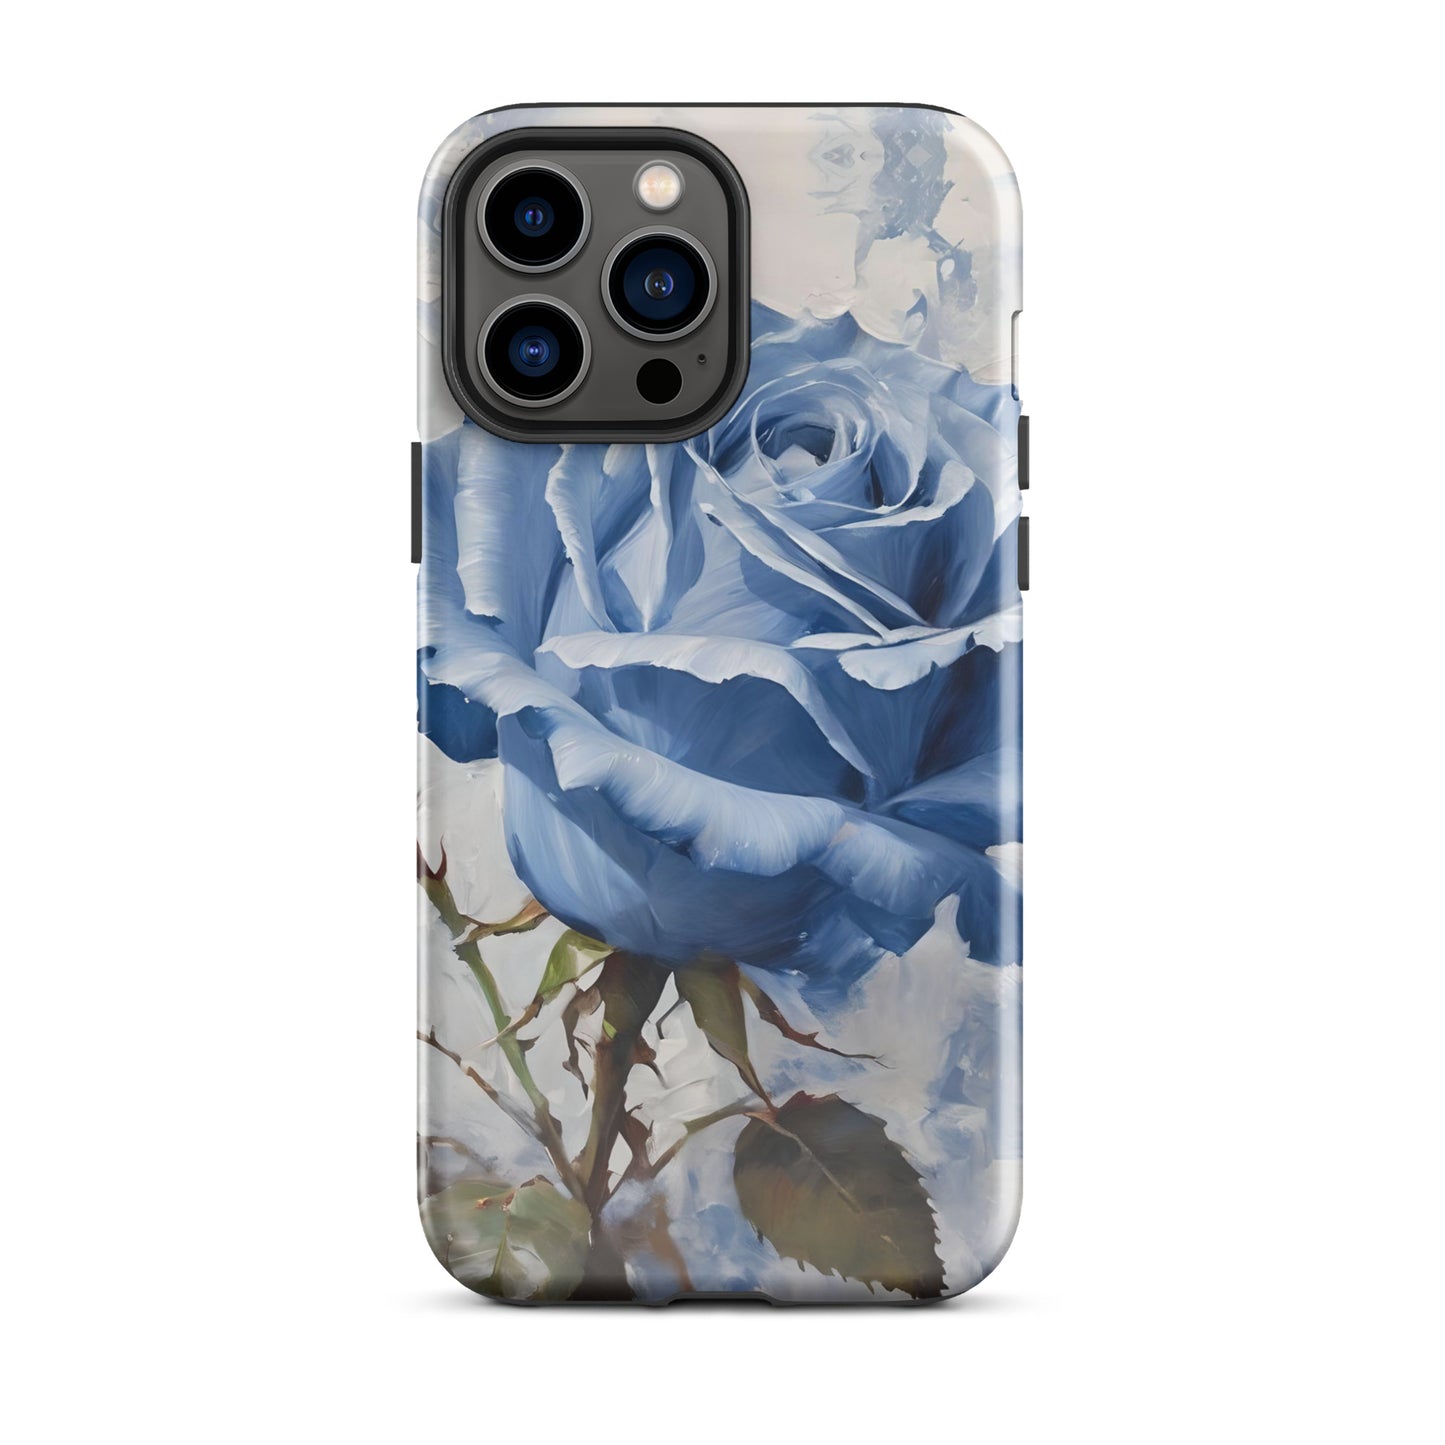 Humboldt No. 1 Blue Rose Tough Case for iPhone®